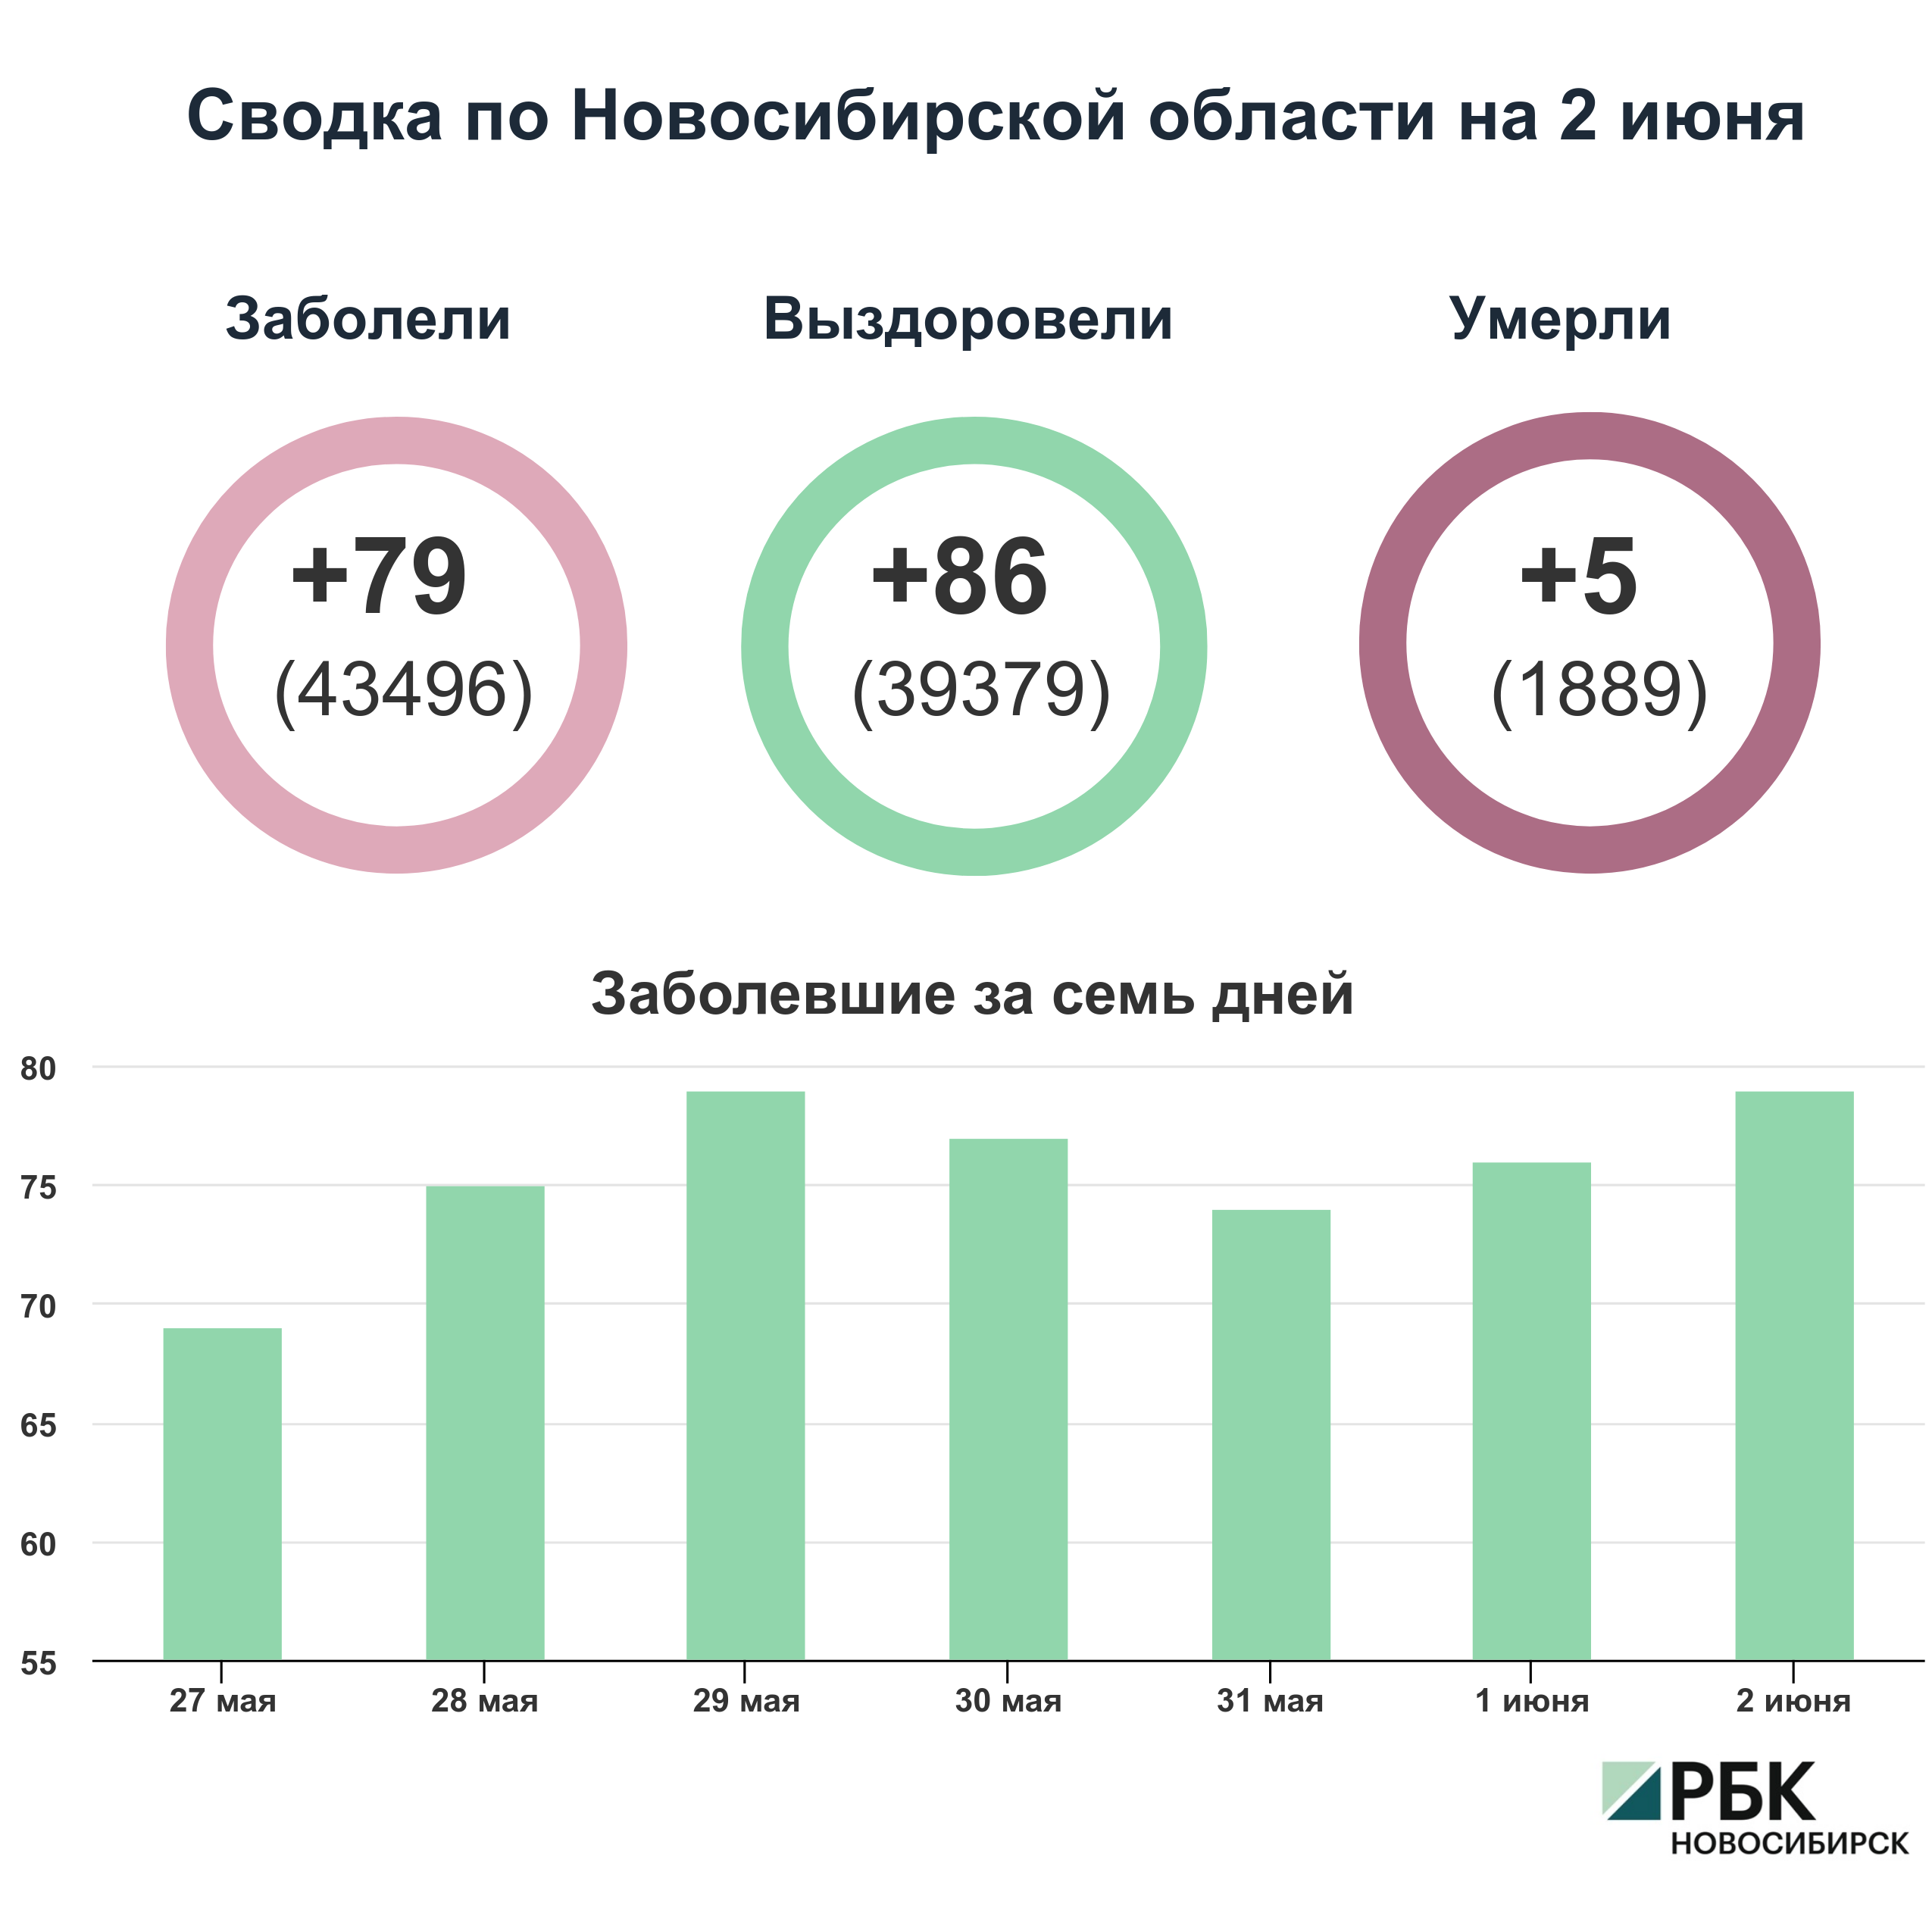 Коронавирус в Новосибирске: сводка на 2 июня